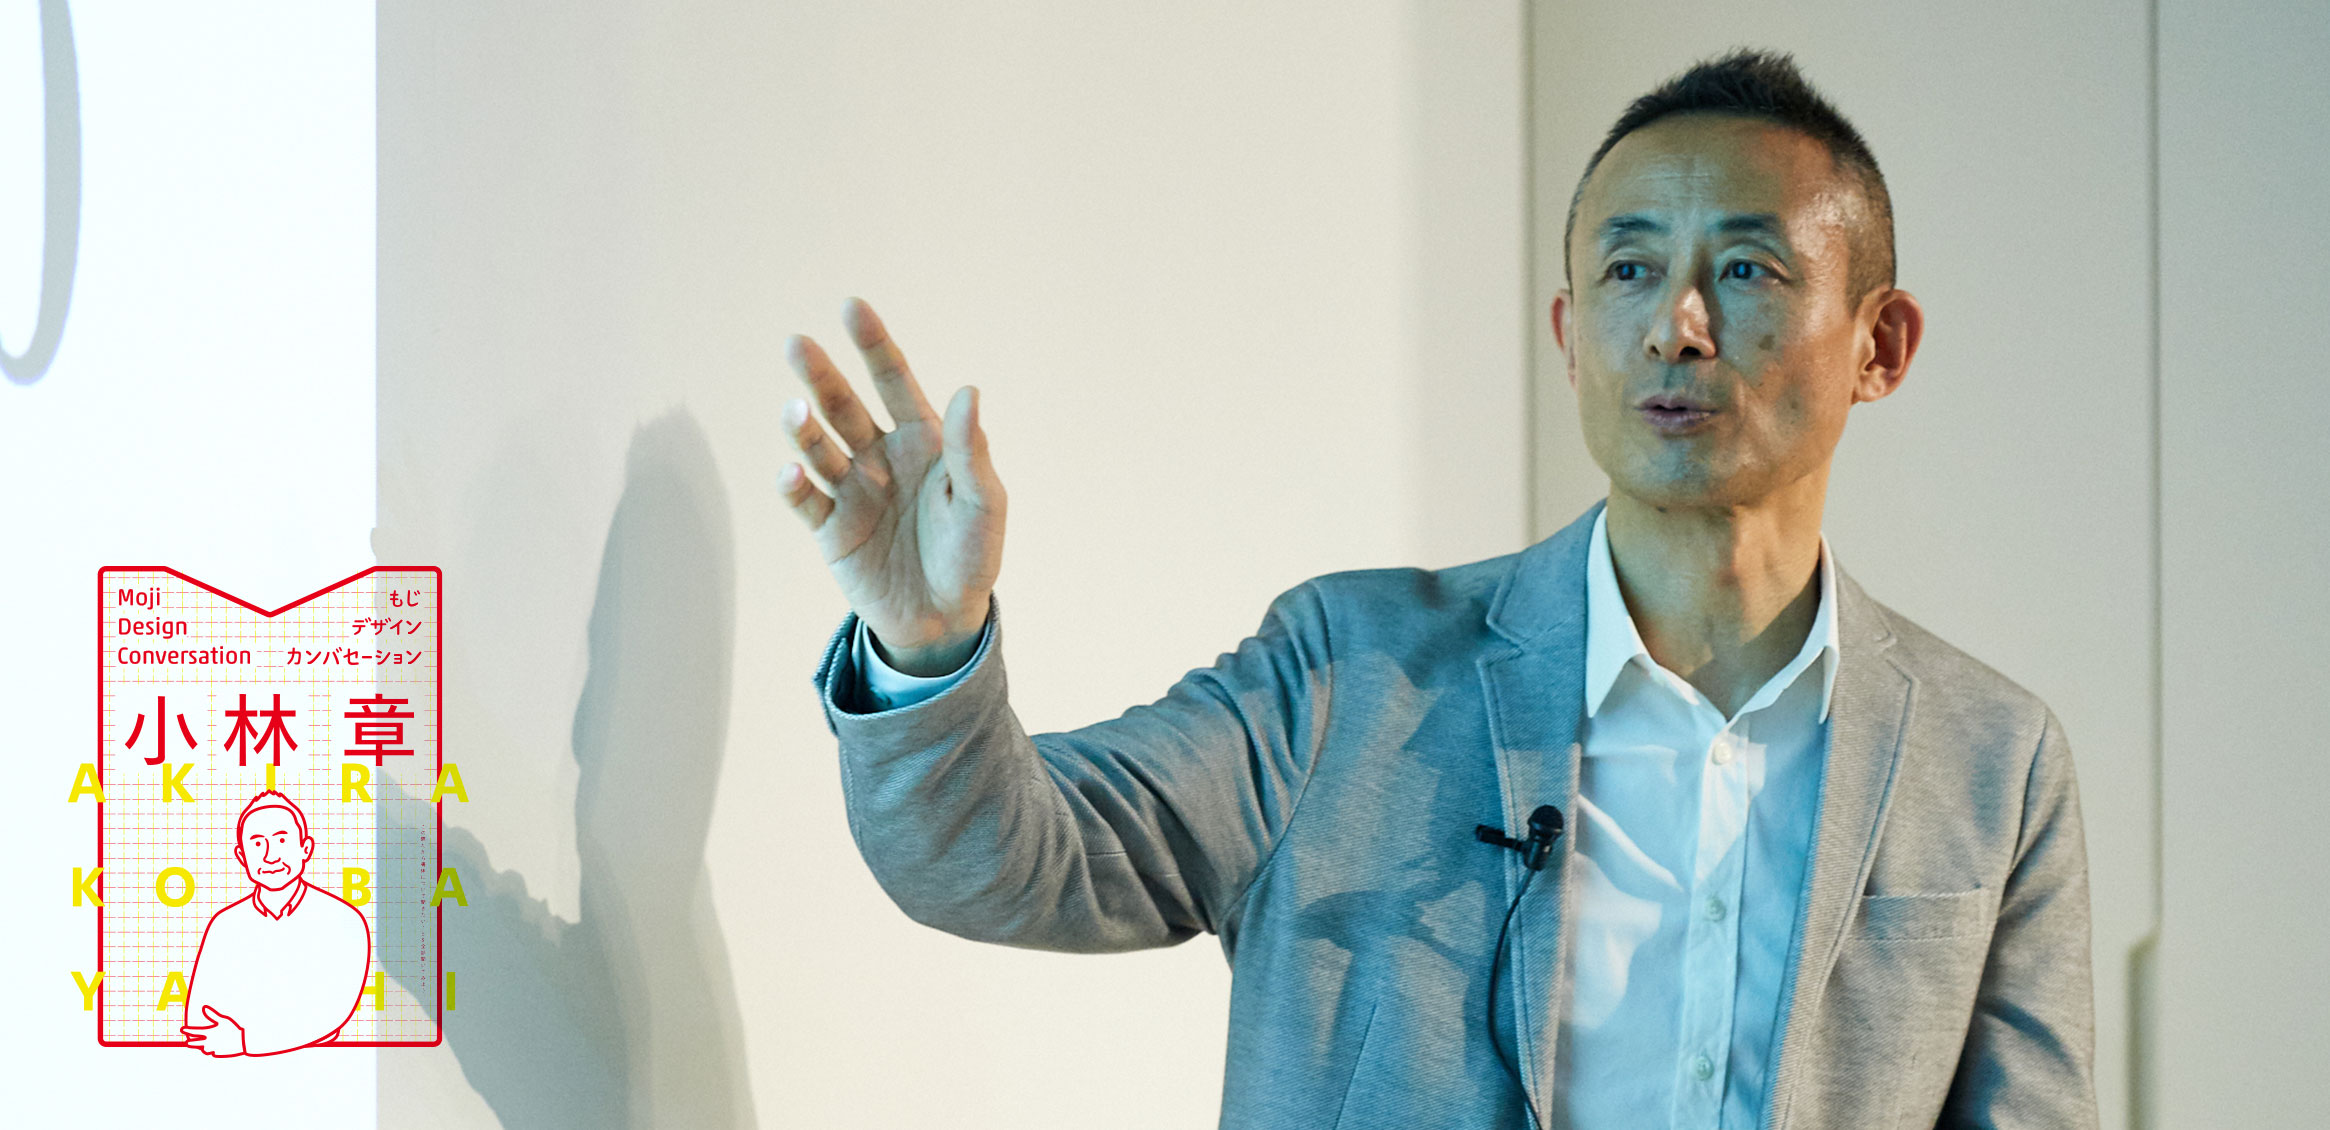 Akira Kobayashi “Moji Design Conversation”  Talk Event Vol. 1—Creating a Brand Voice